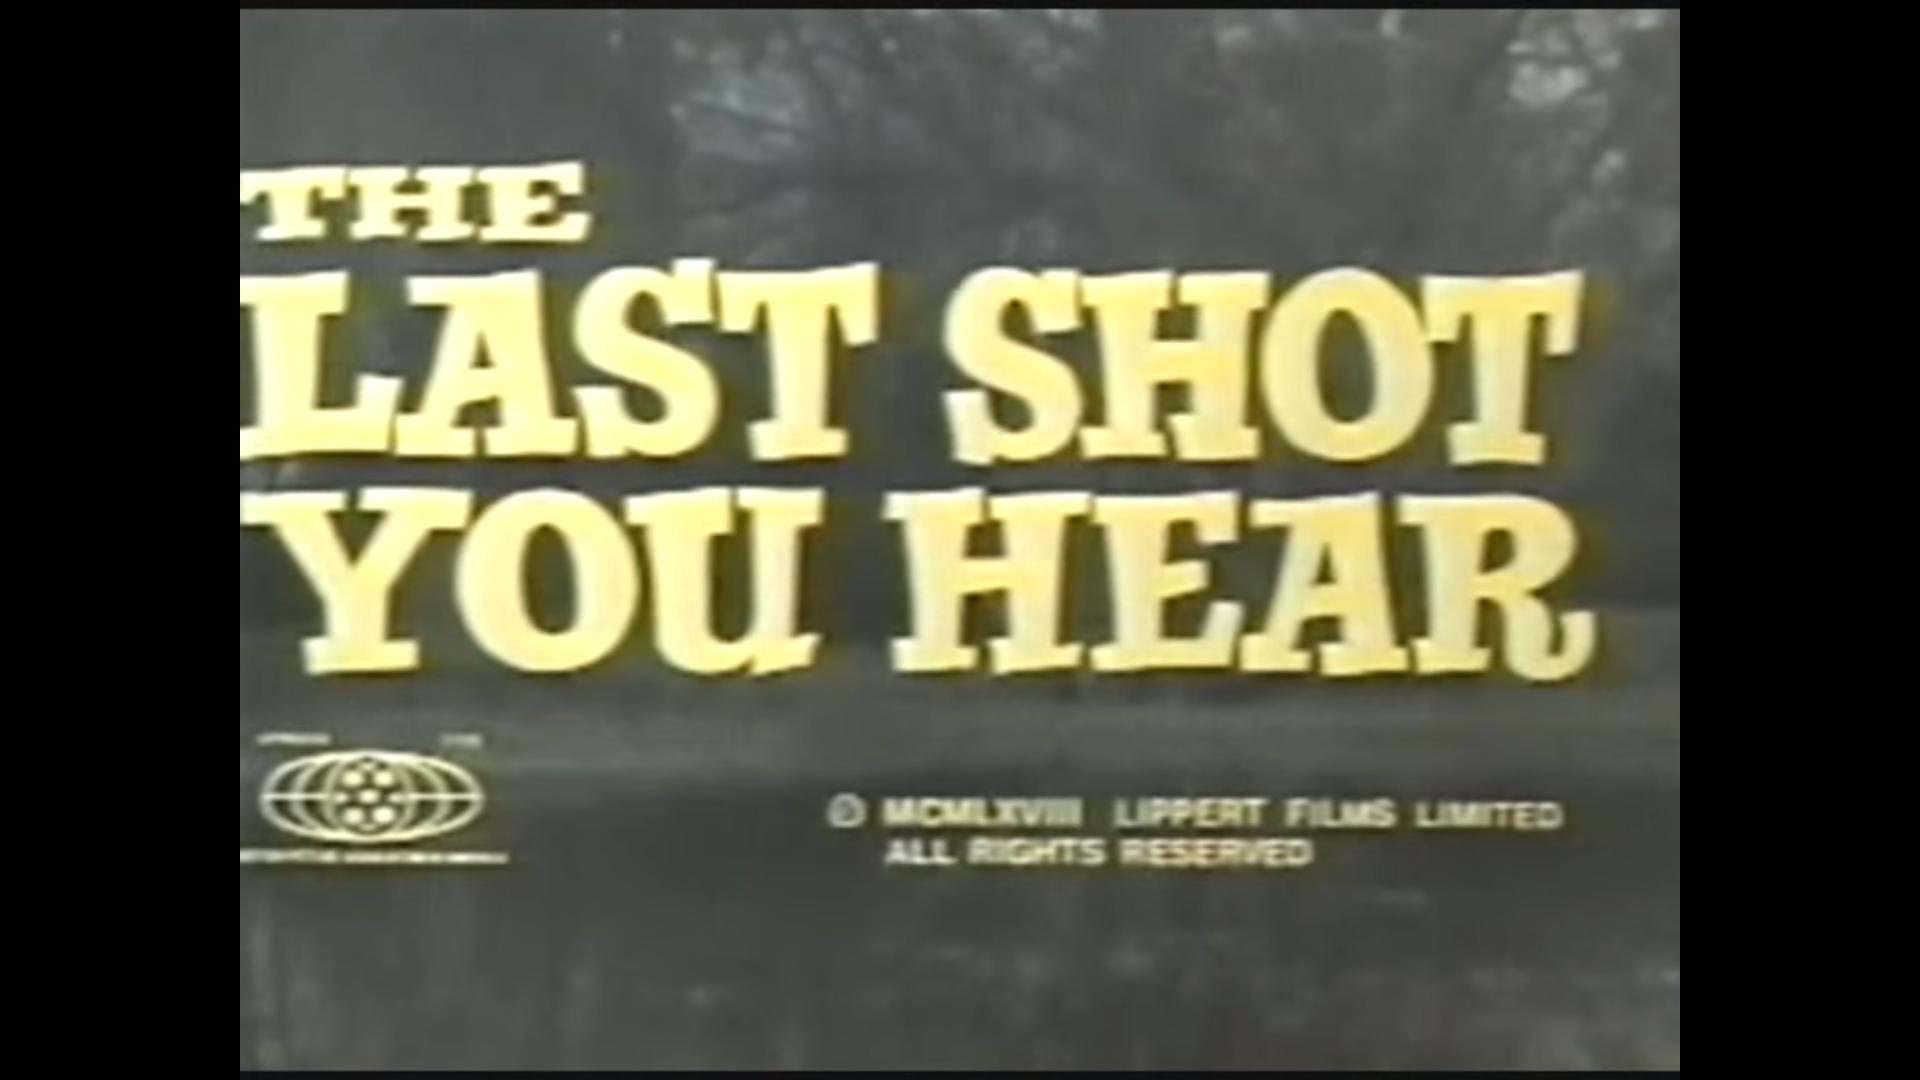 The Last Shot You Hear (1969) starring Hugh Marlowe on DVD on DVD